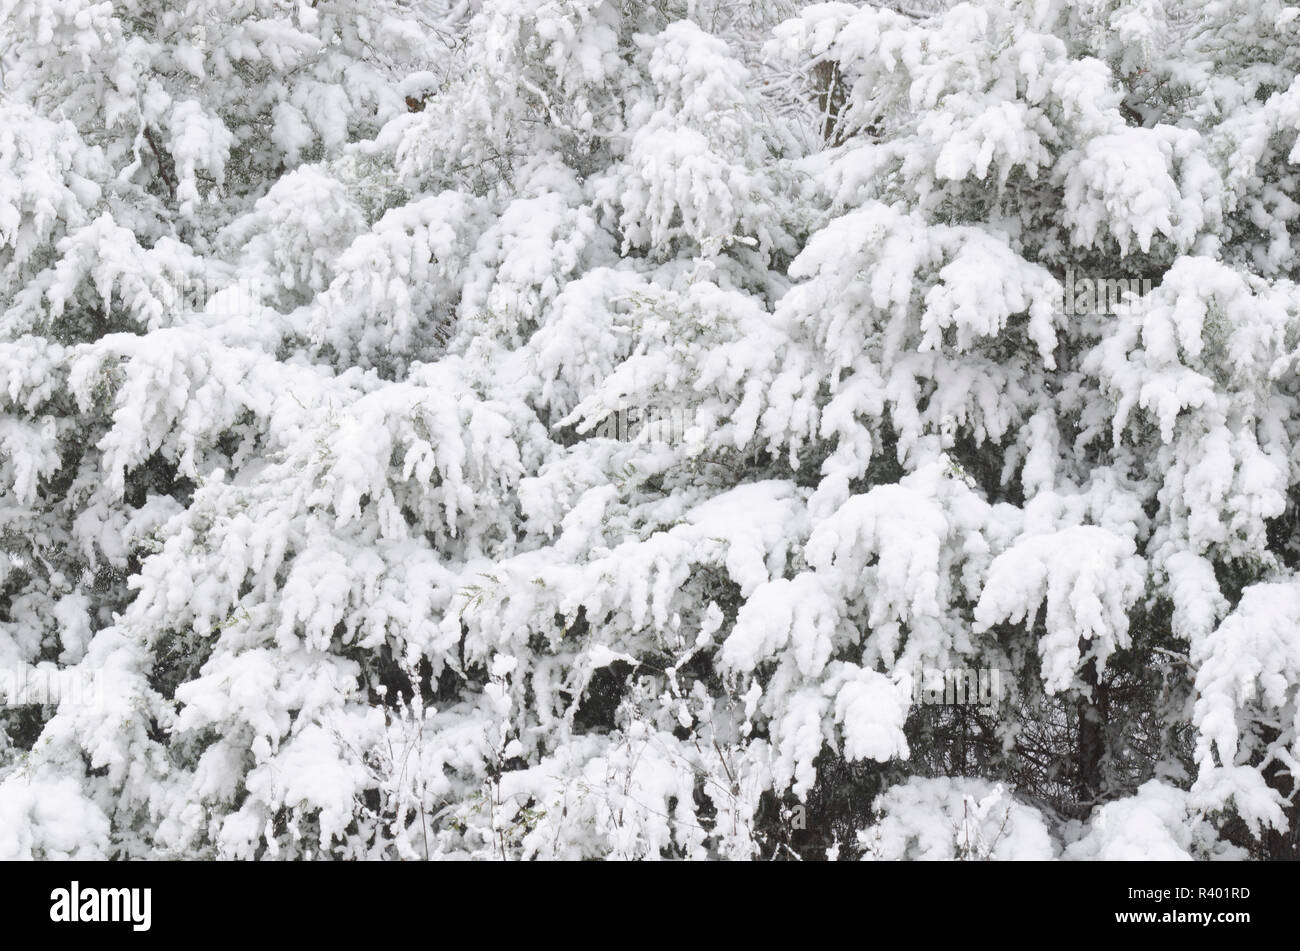 Eastern Red Cedar, Juniperus virginiana, with clinging heavy wet snow Stock Photo